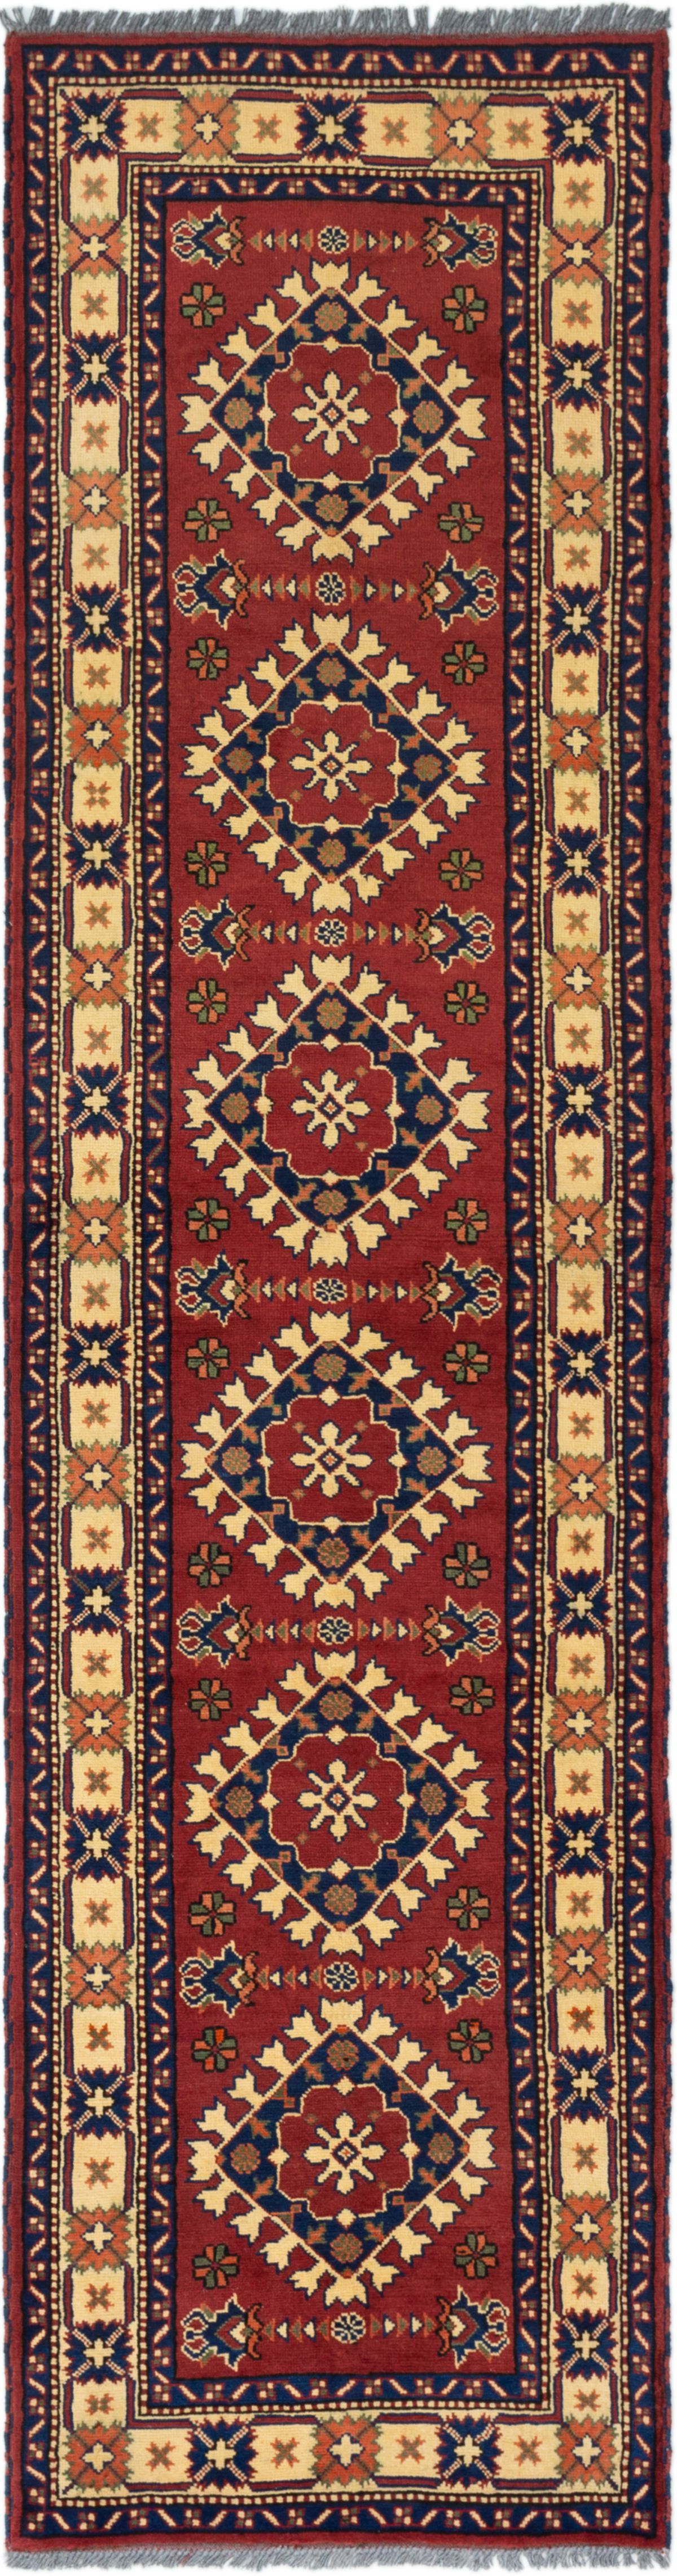 Hand-knotted Finest Kargahi Dark Red Wool Rug 2'9" x 10'9" Size: 2'9" x 10'9"  